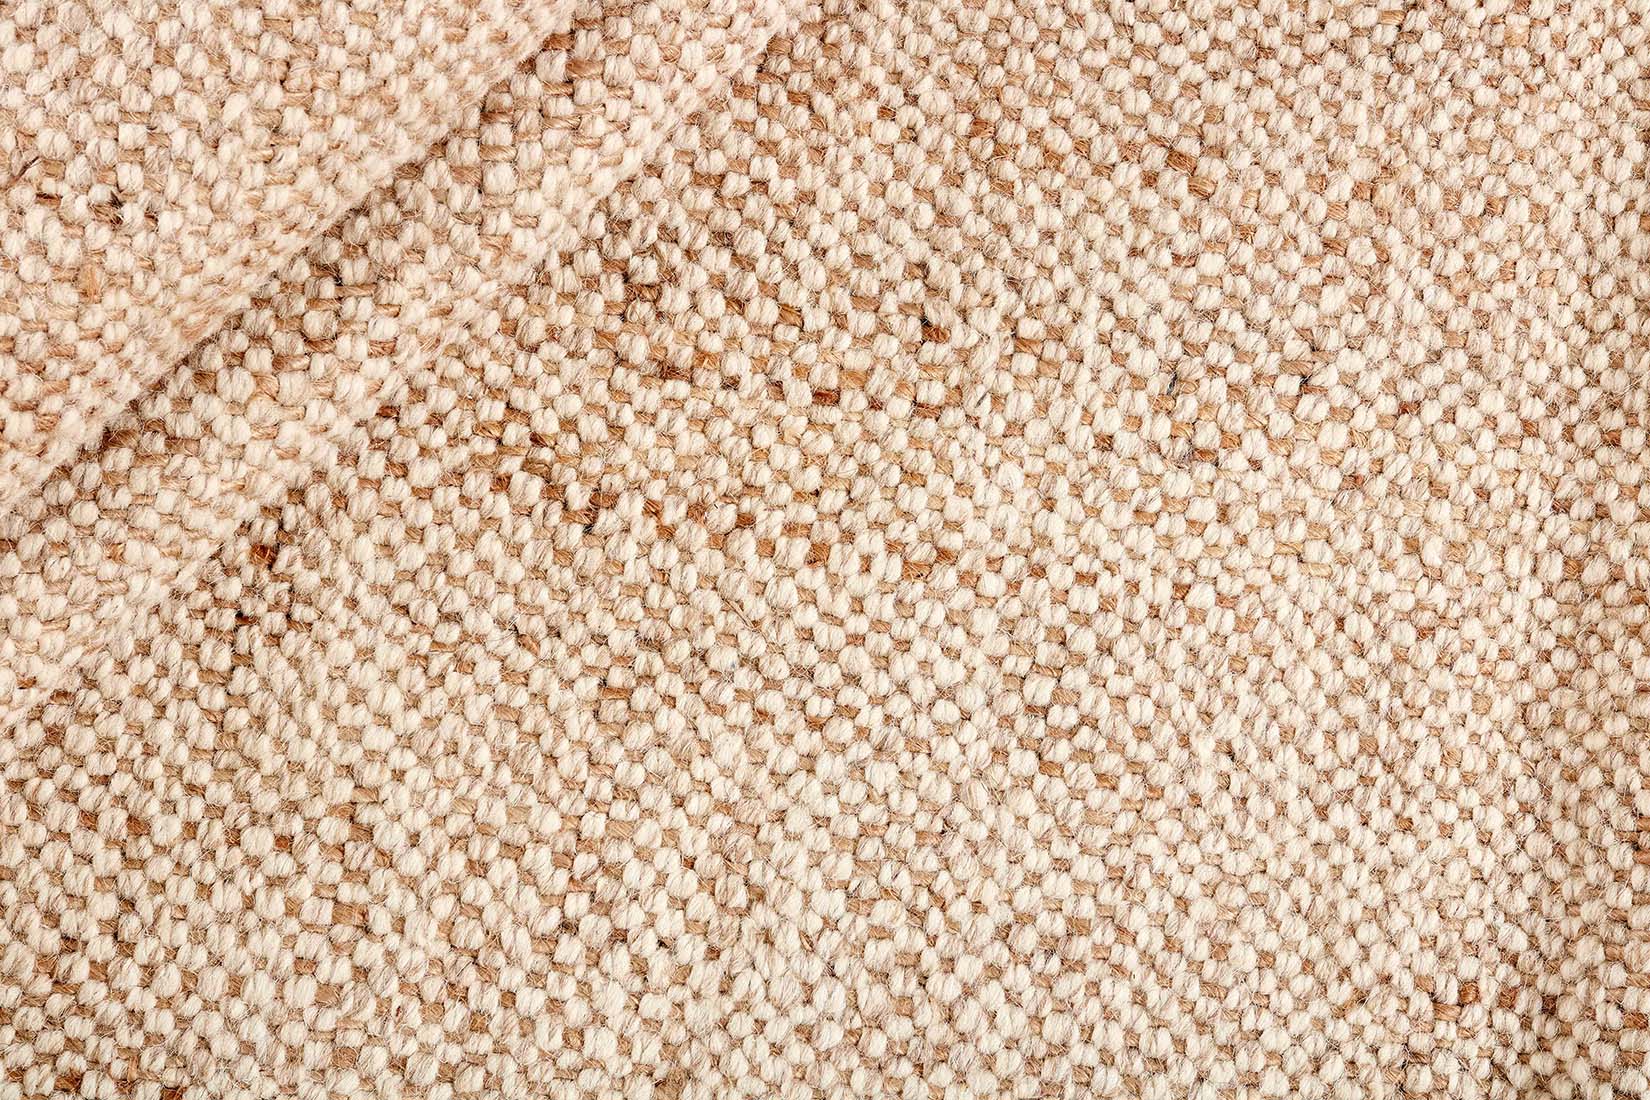 Beige textured flatweave rug
